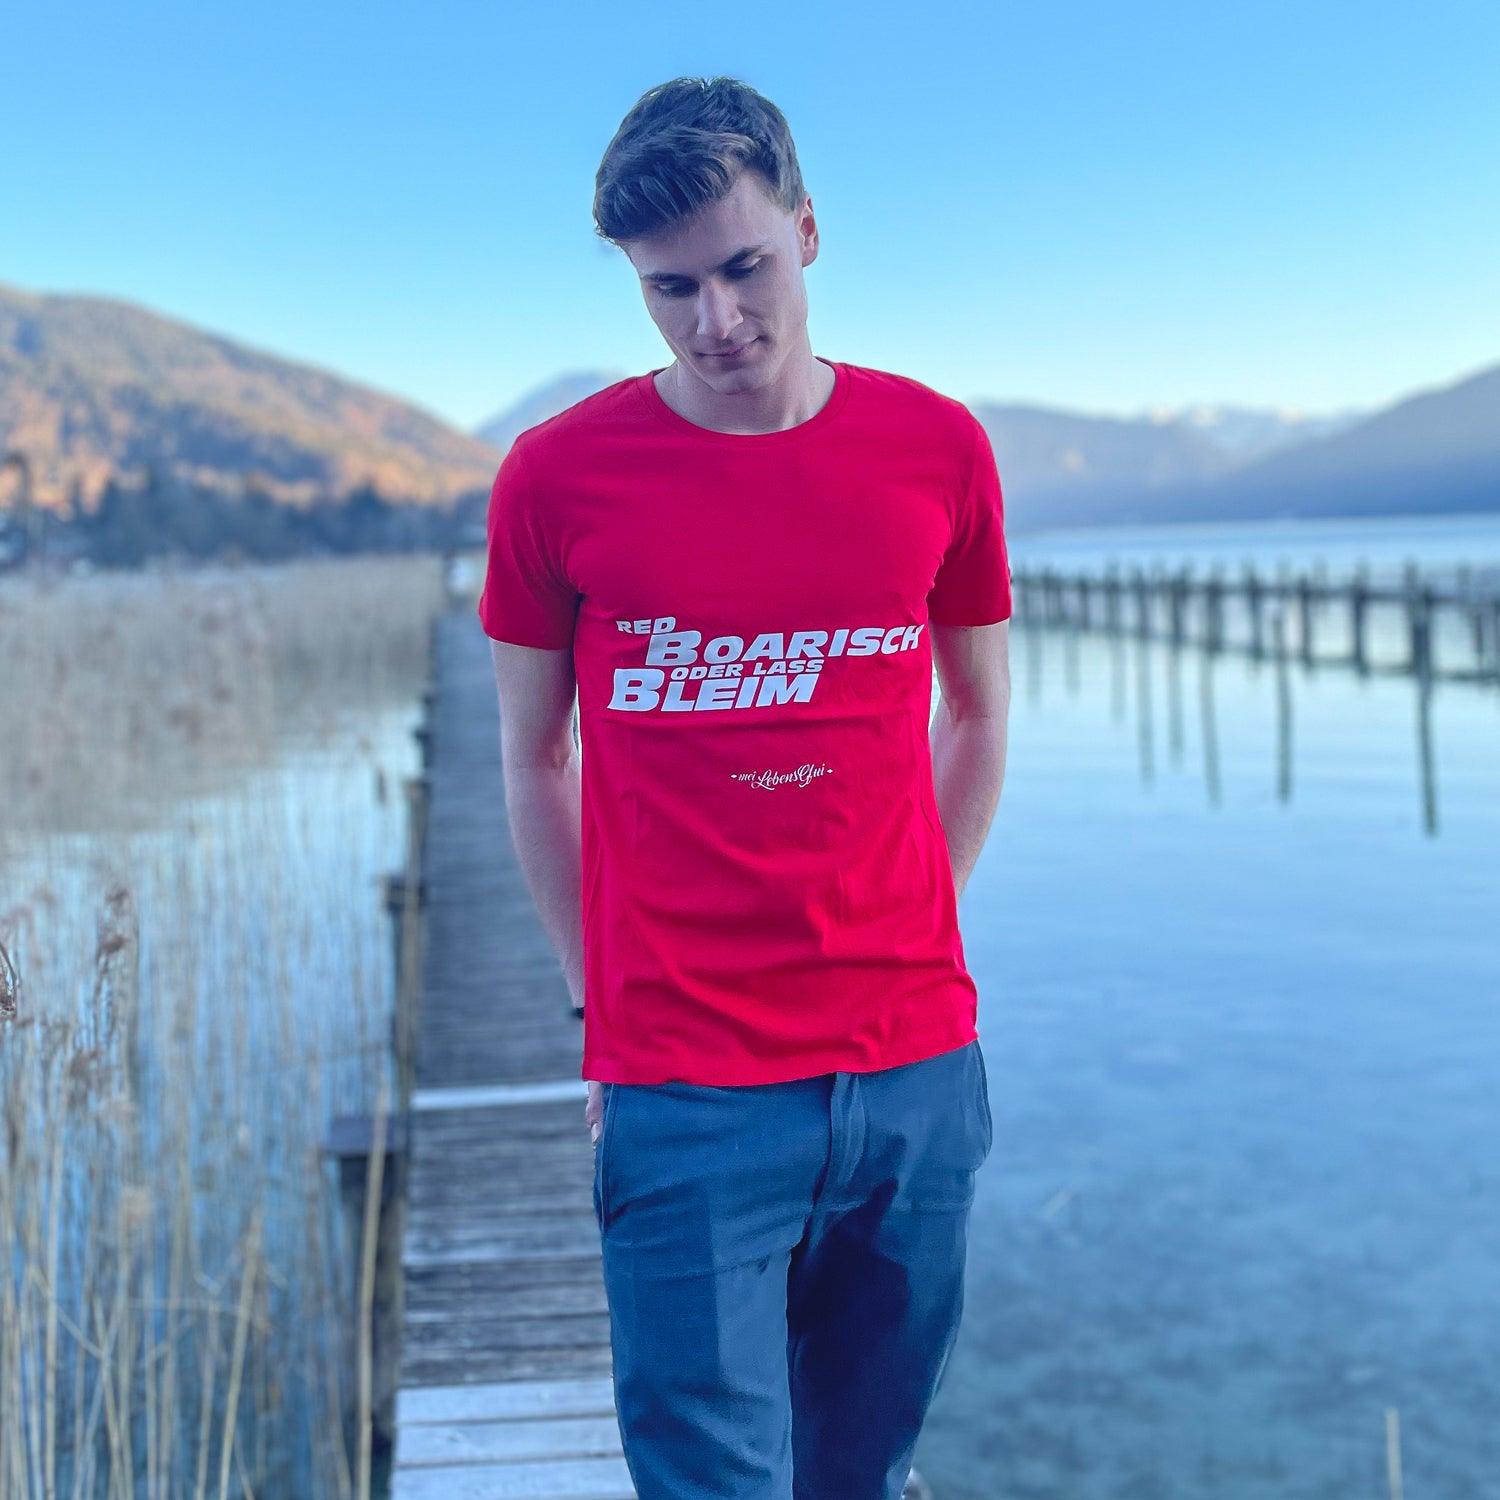 Herren T-Shirt "Red boarisch" - bavariashop - mei LebensGfui